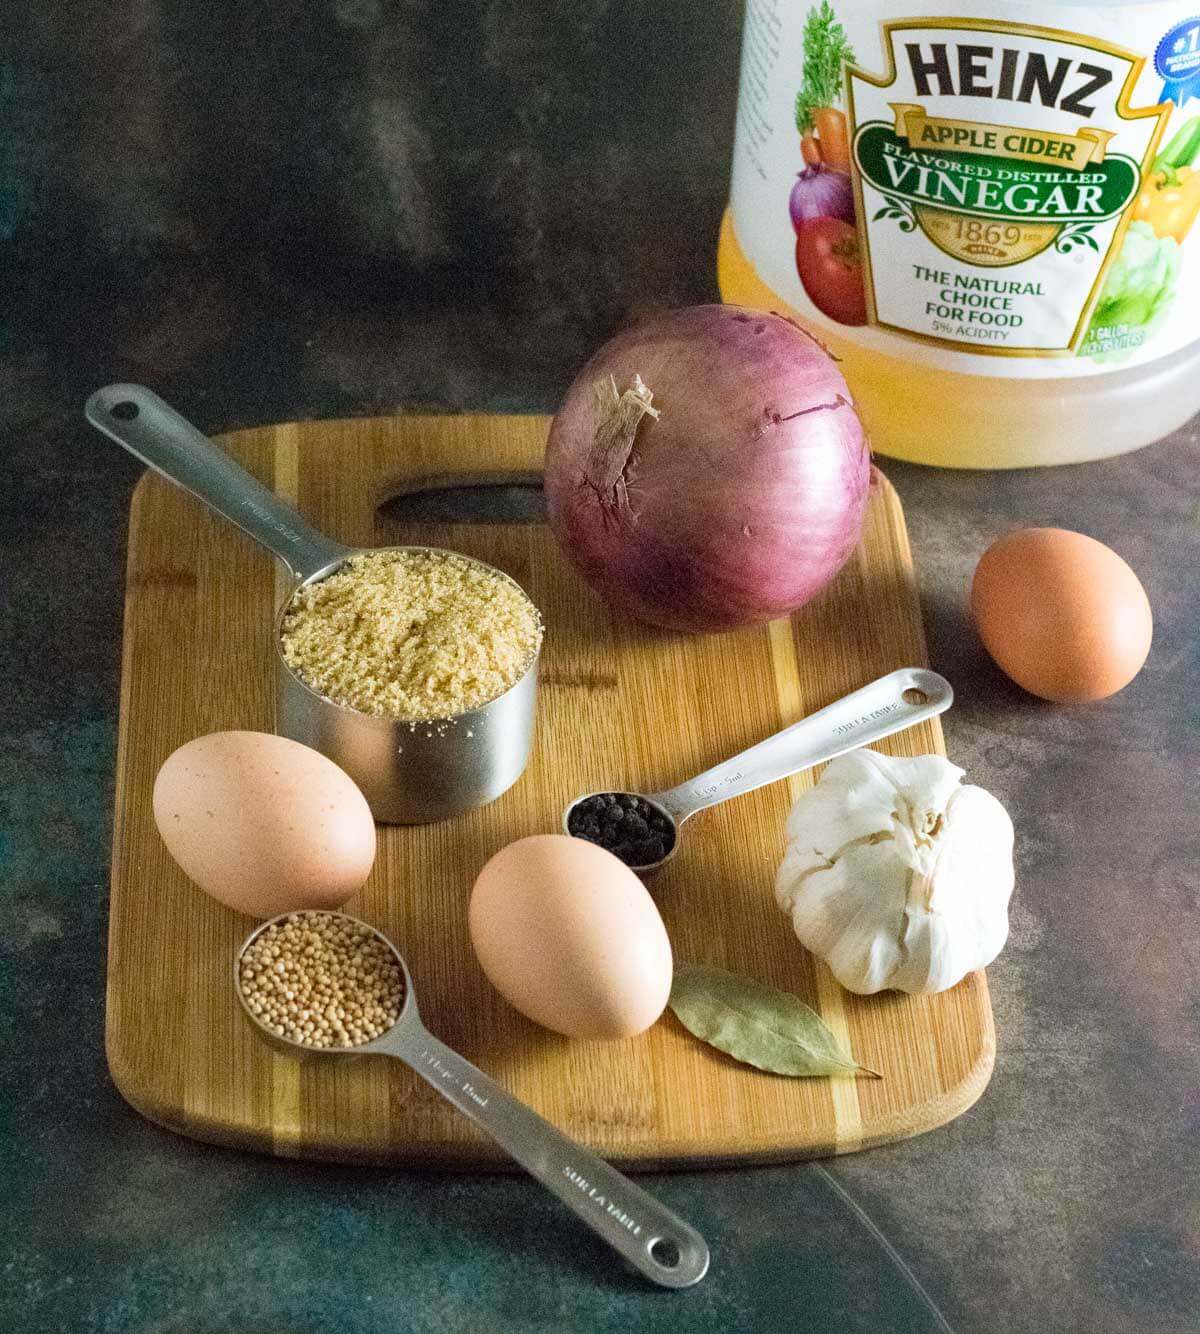 Showing ingredients for pickled eggs with apple cider vinegar.